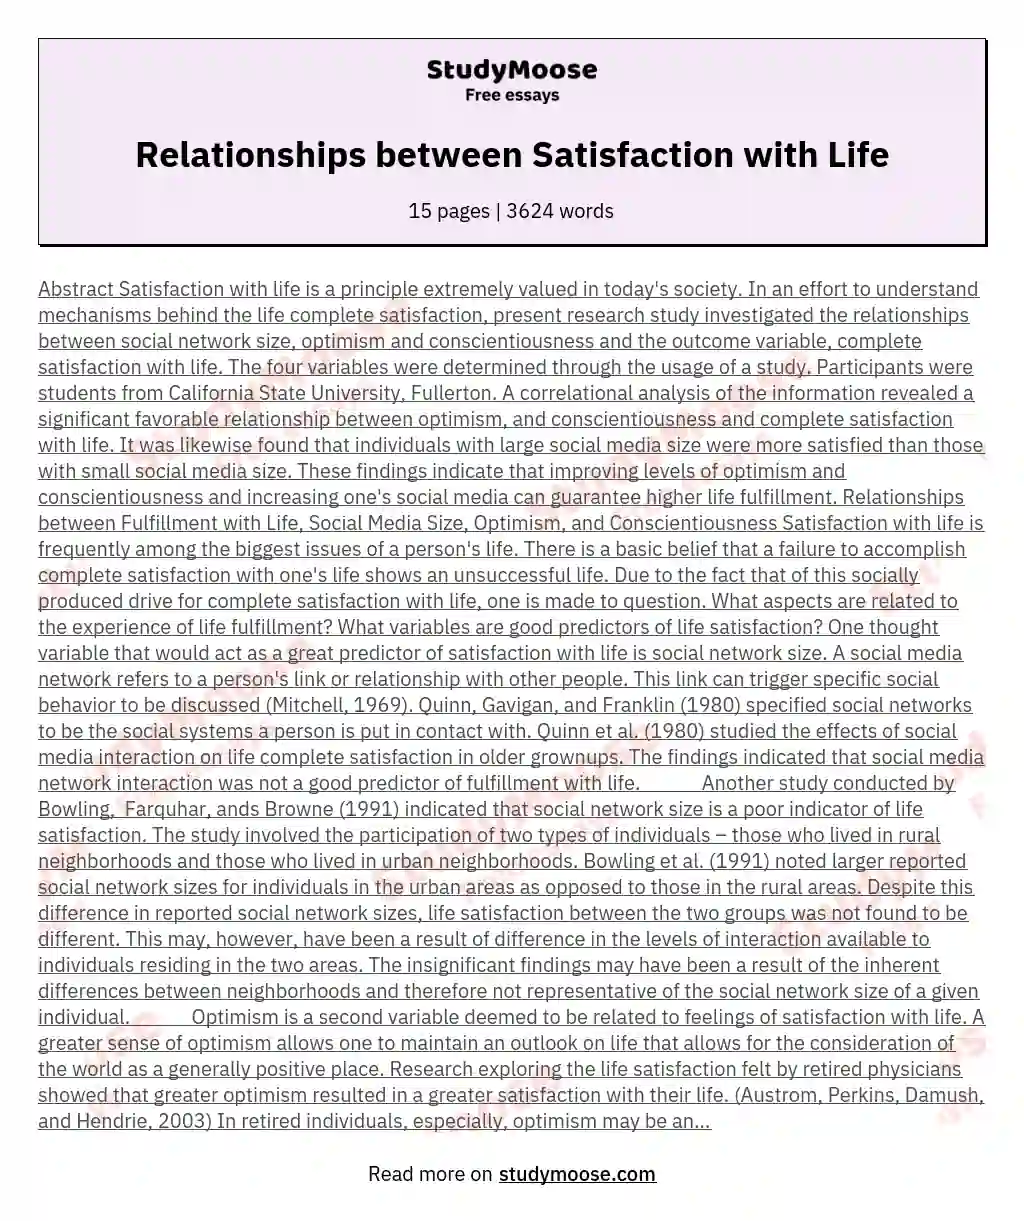 Relationships between Satisfaction with Life